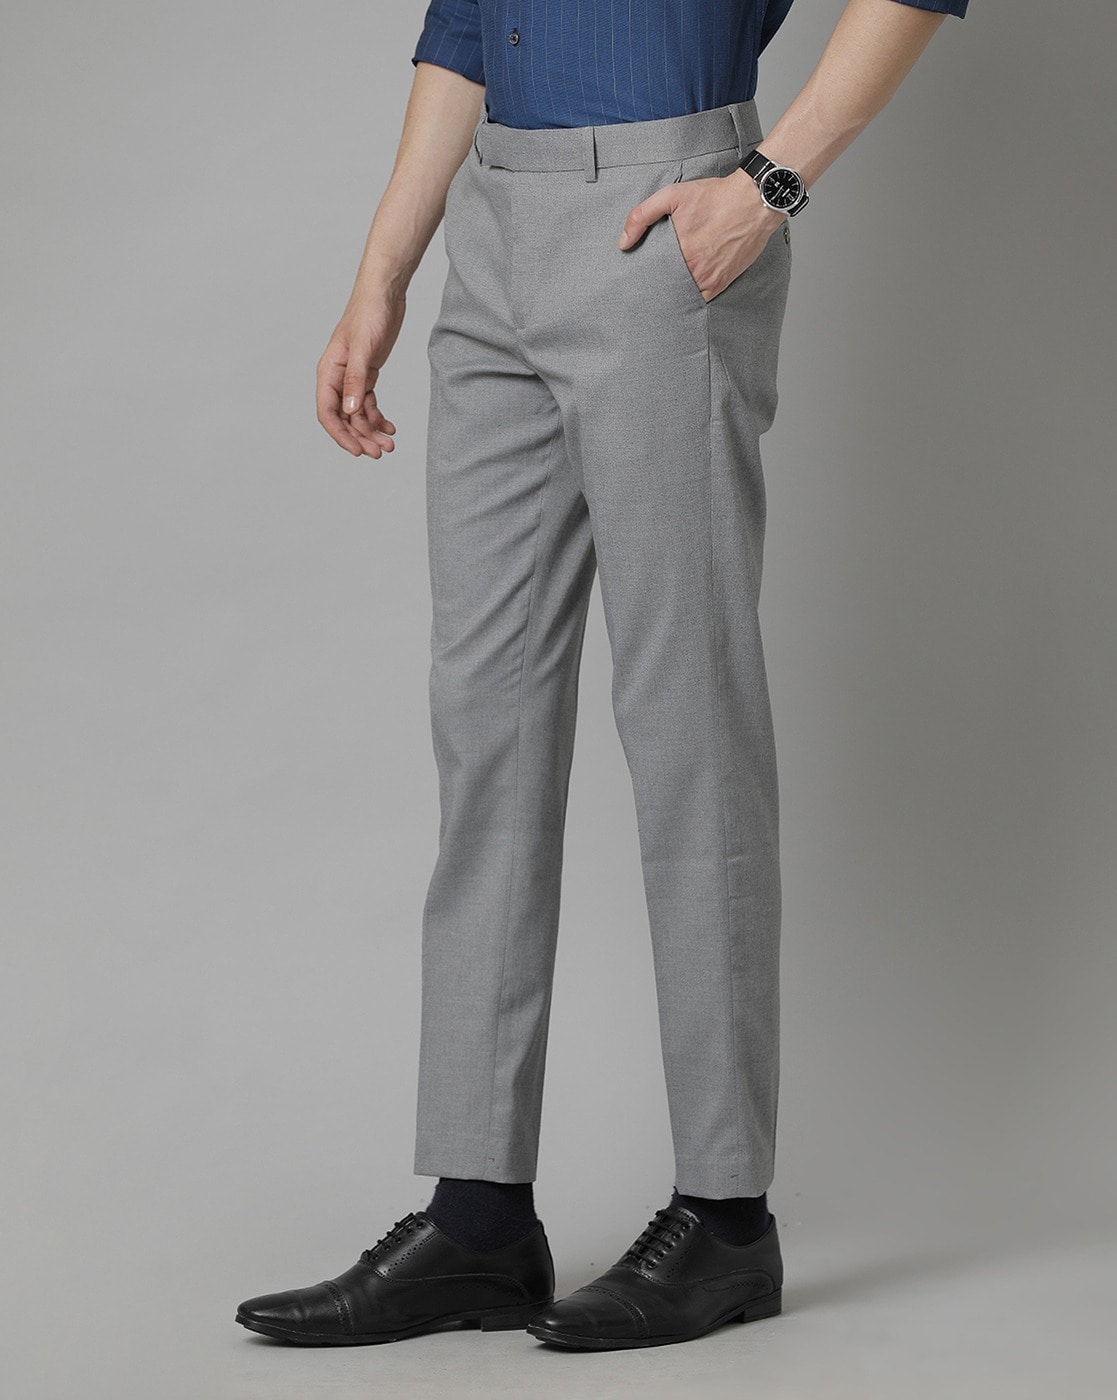 Buy Peter England Men Grey Check Super Slim Fit Formal Trousers online